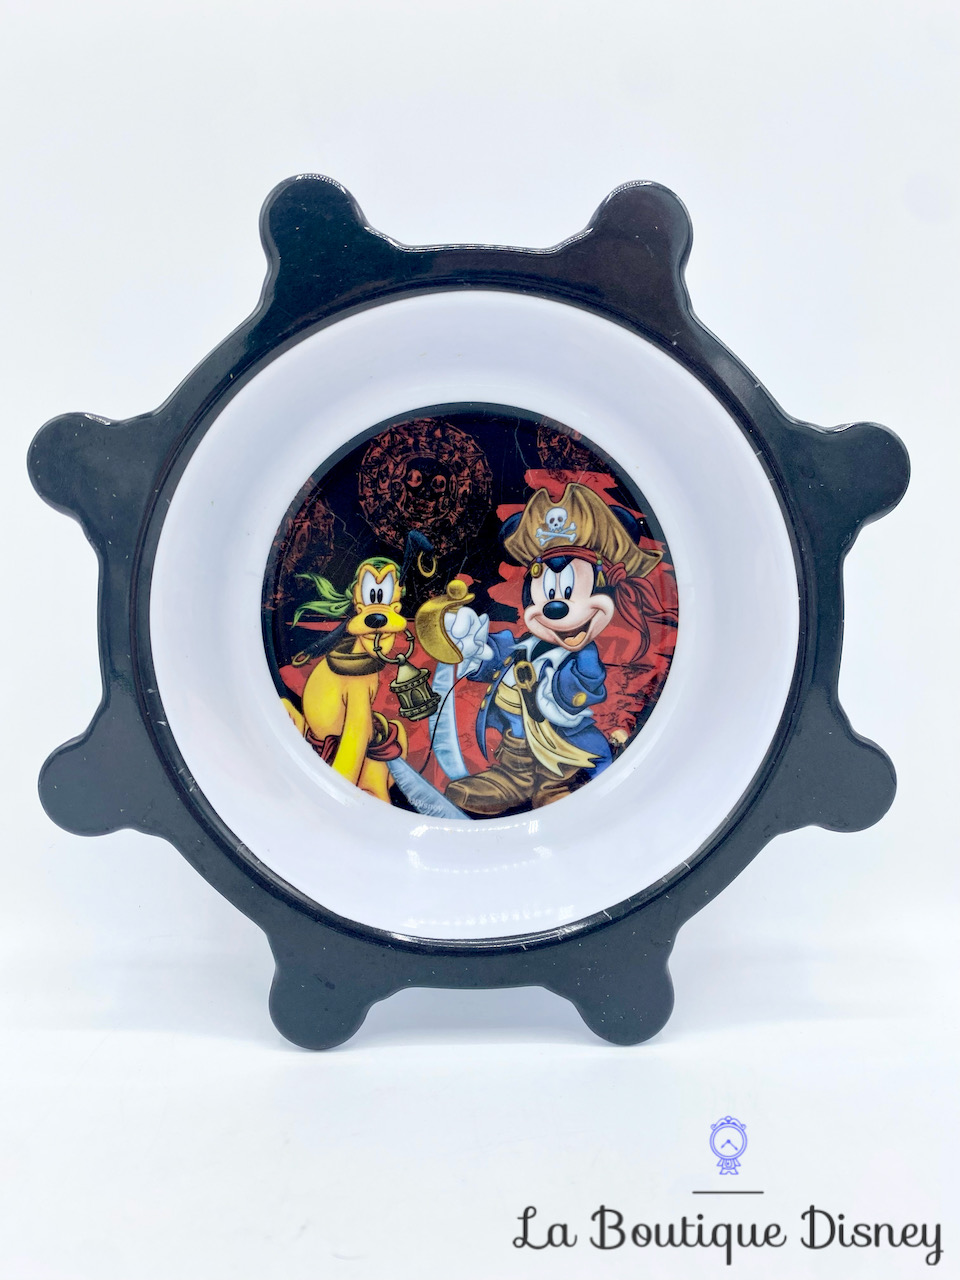 Assiette creuse Mickey Pluto Pirates des Caraïbes Disneyland Paris Disney plastique gouvernail